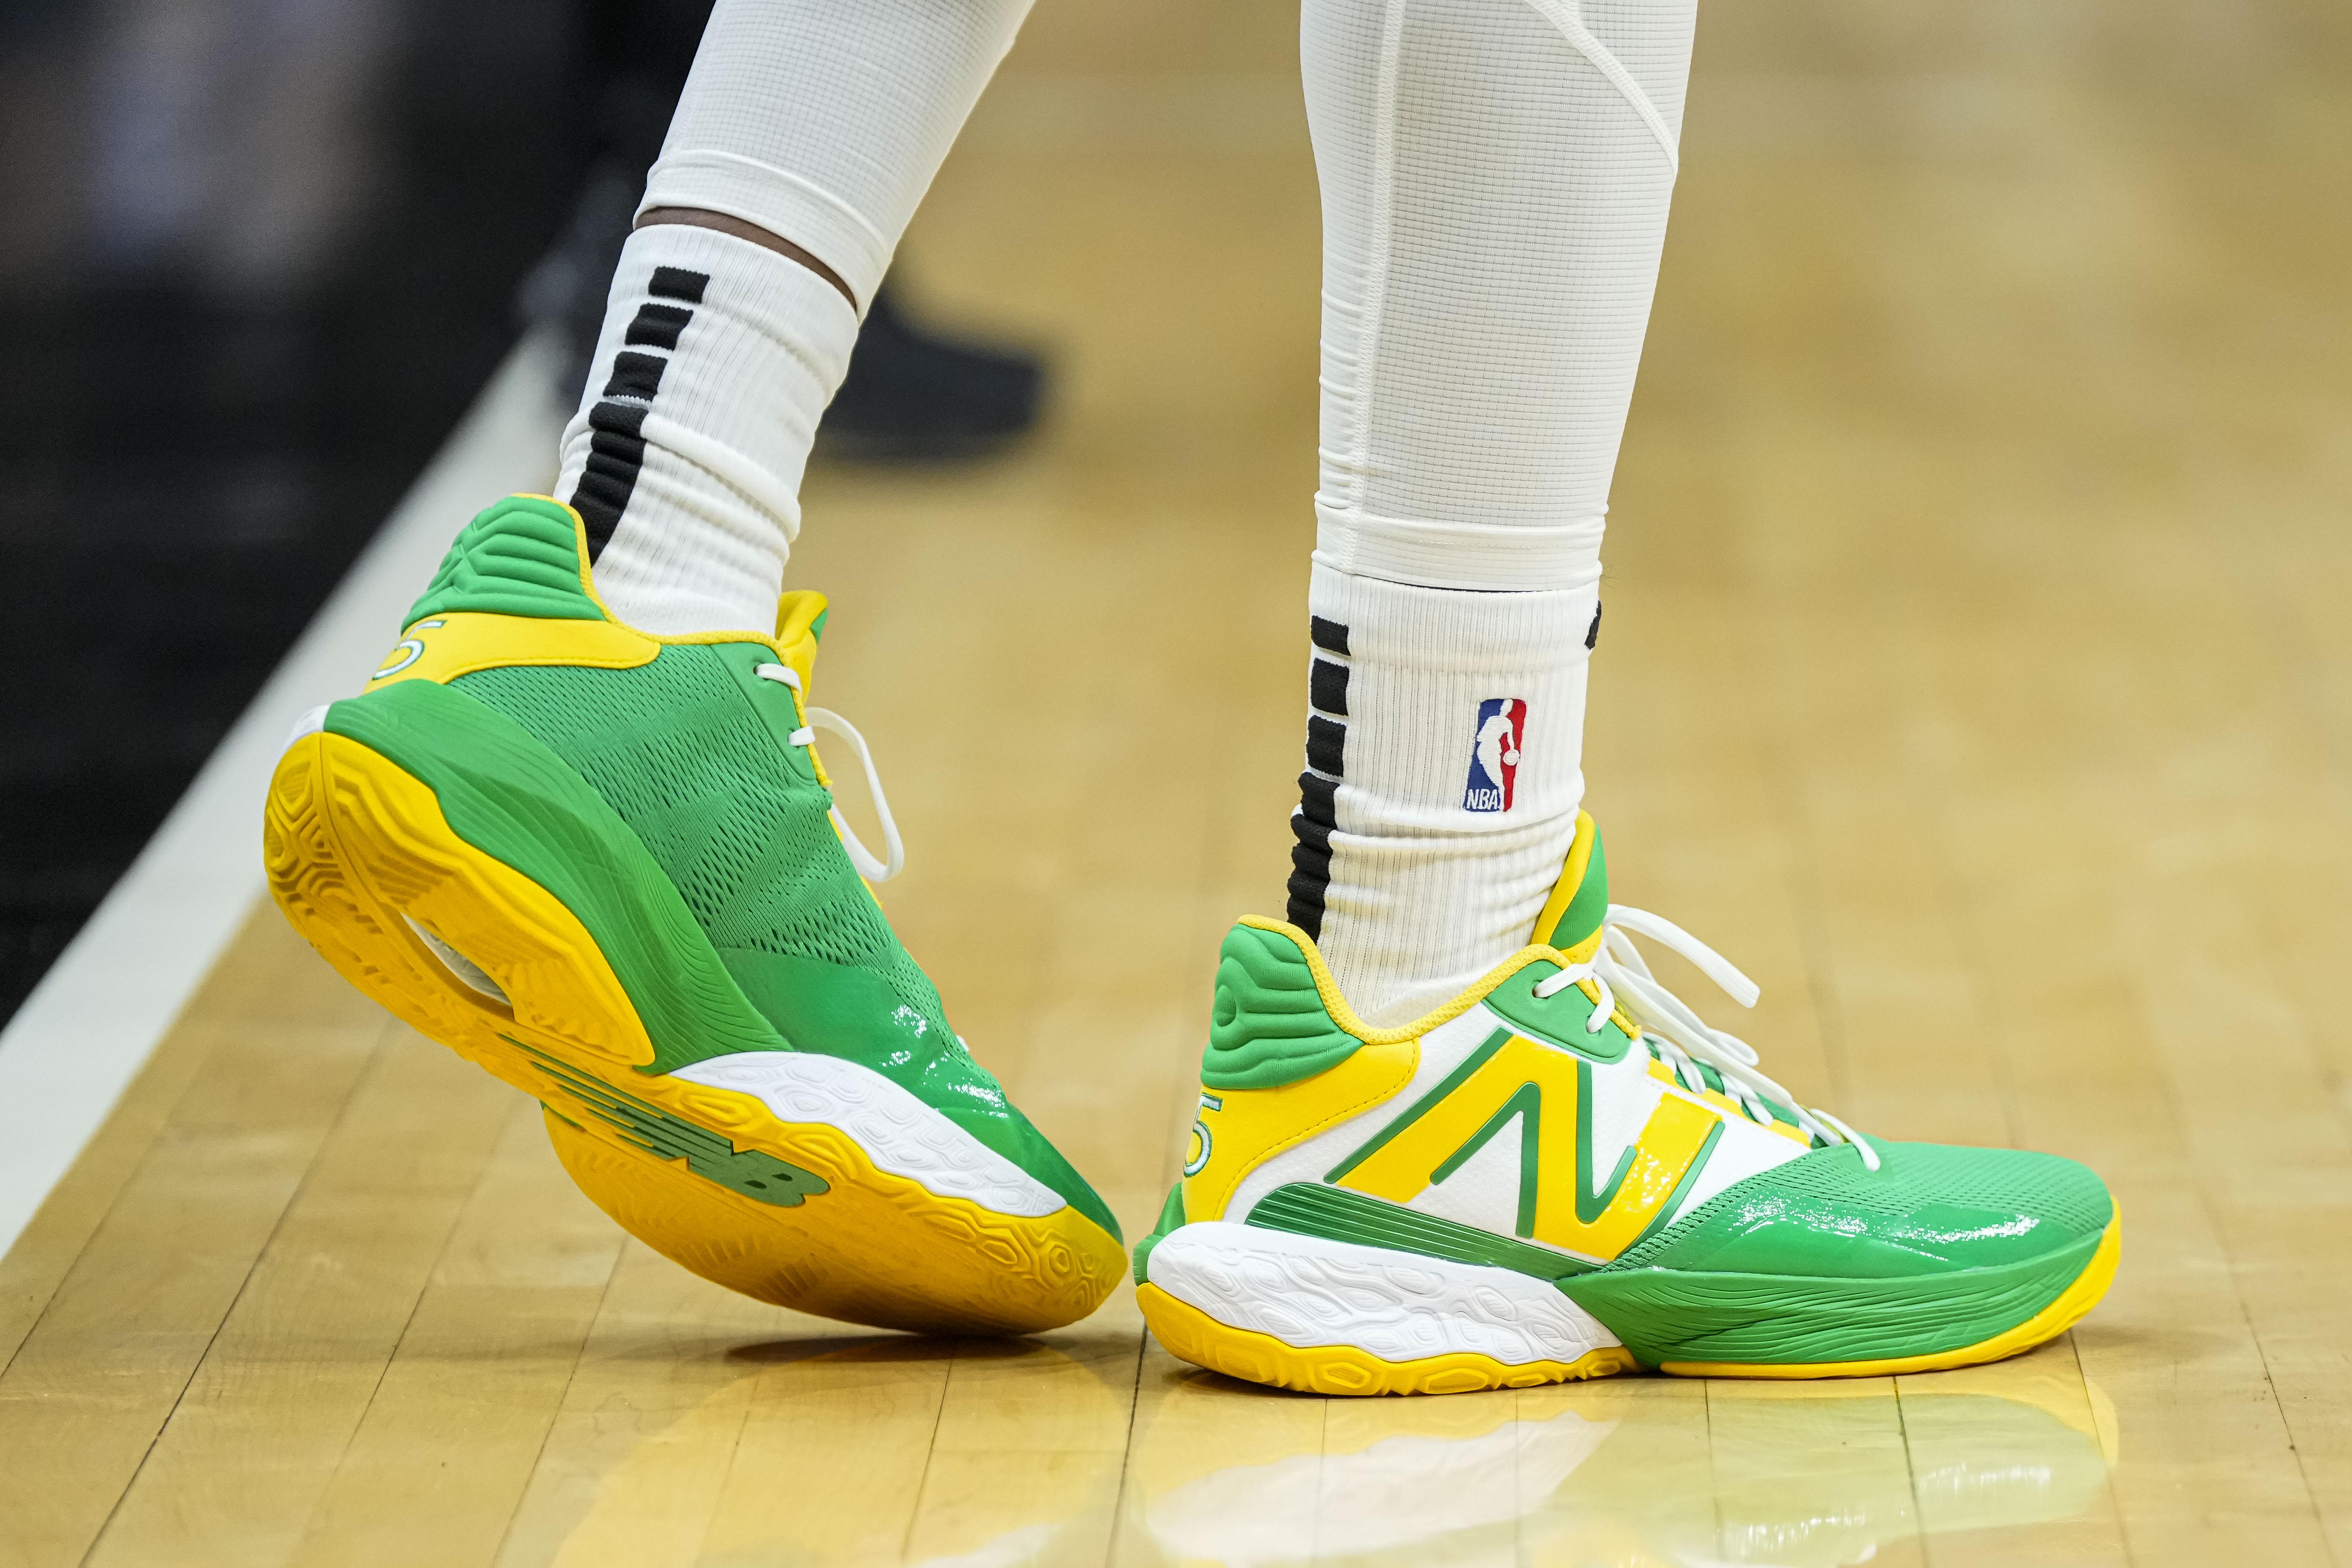 Atlanta Hawks guard Dejounte Murray's green and yellow New Balance sneakers.